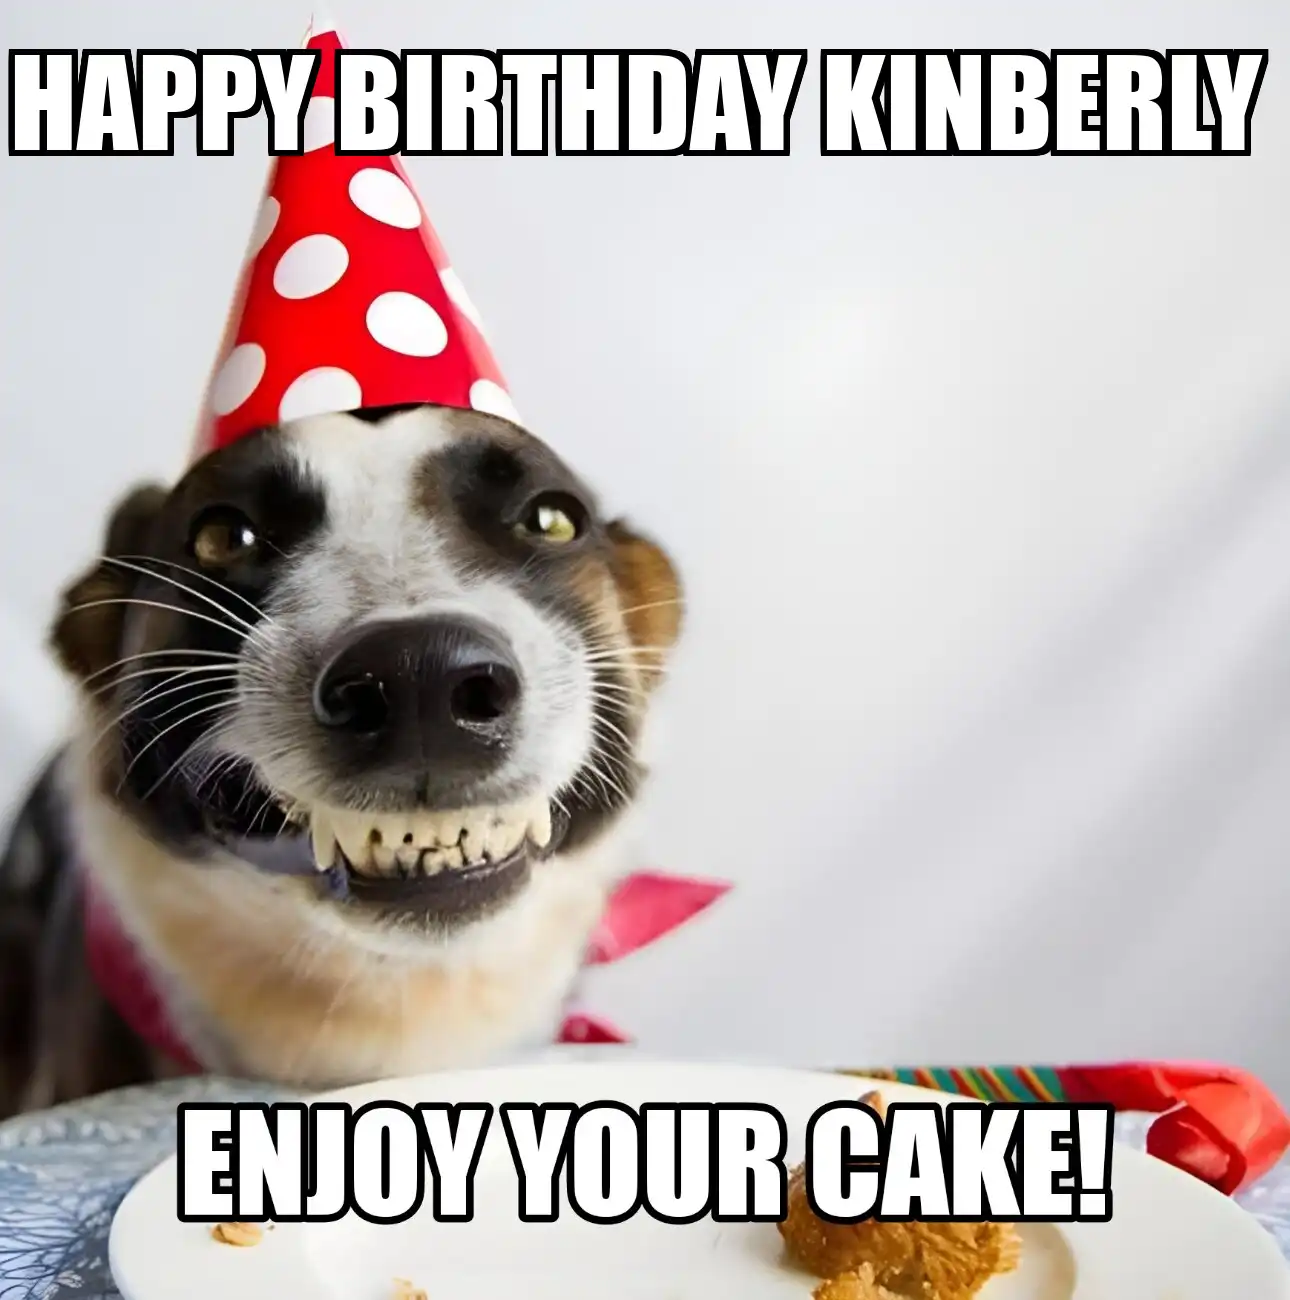 Happy Birthday Kinberly Enjoy Your Cake Dog Meme